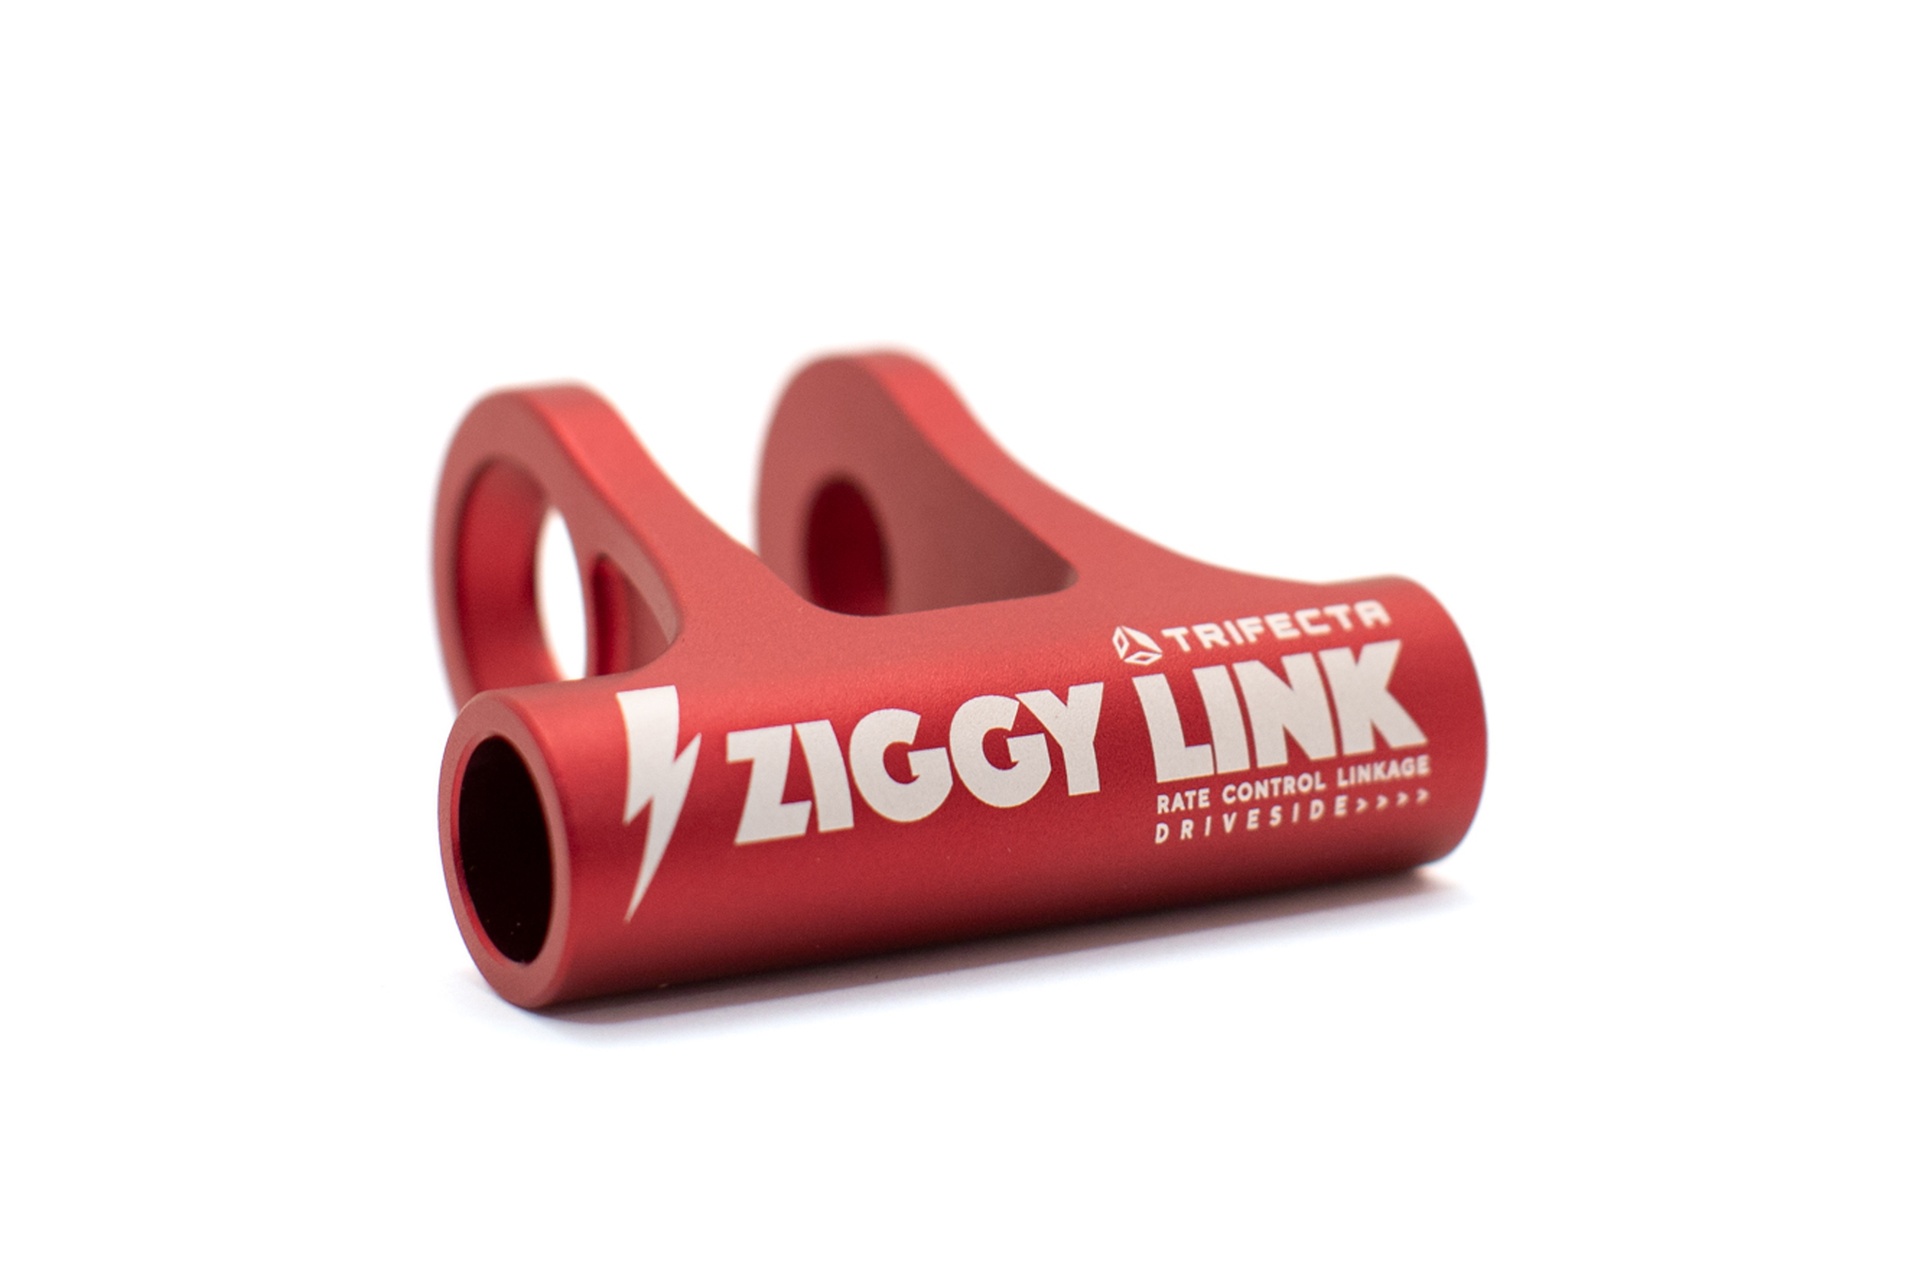 [001.001.0007] Rate Control Link PL - Ziggy Link.jpg